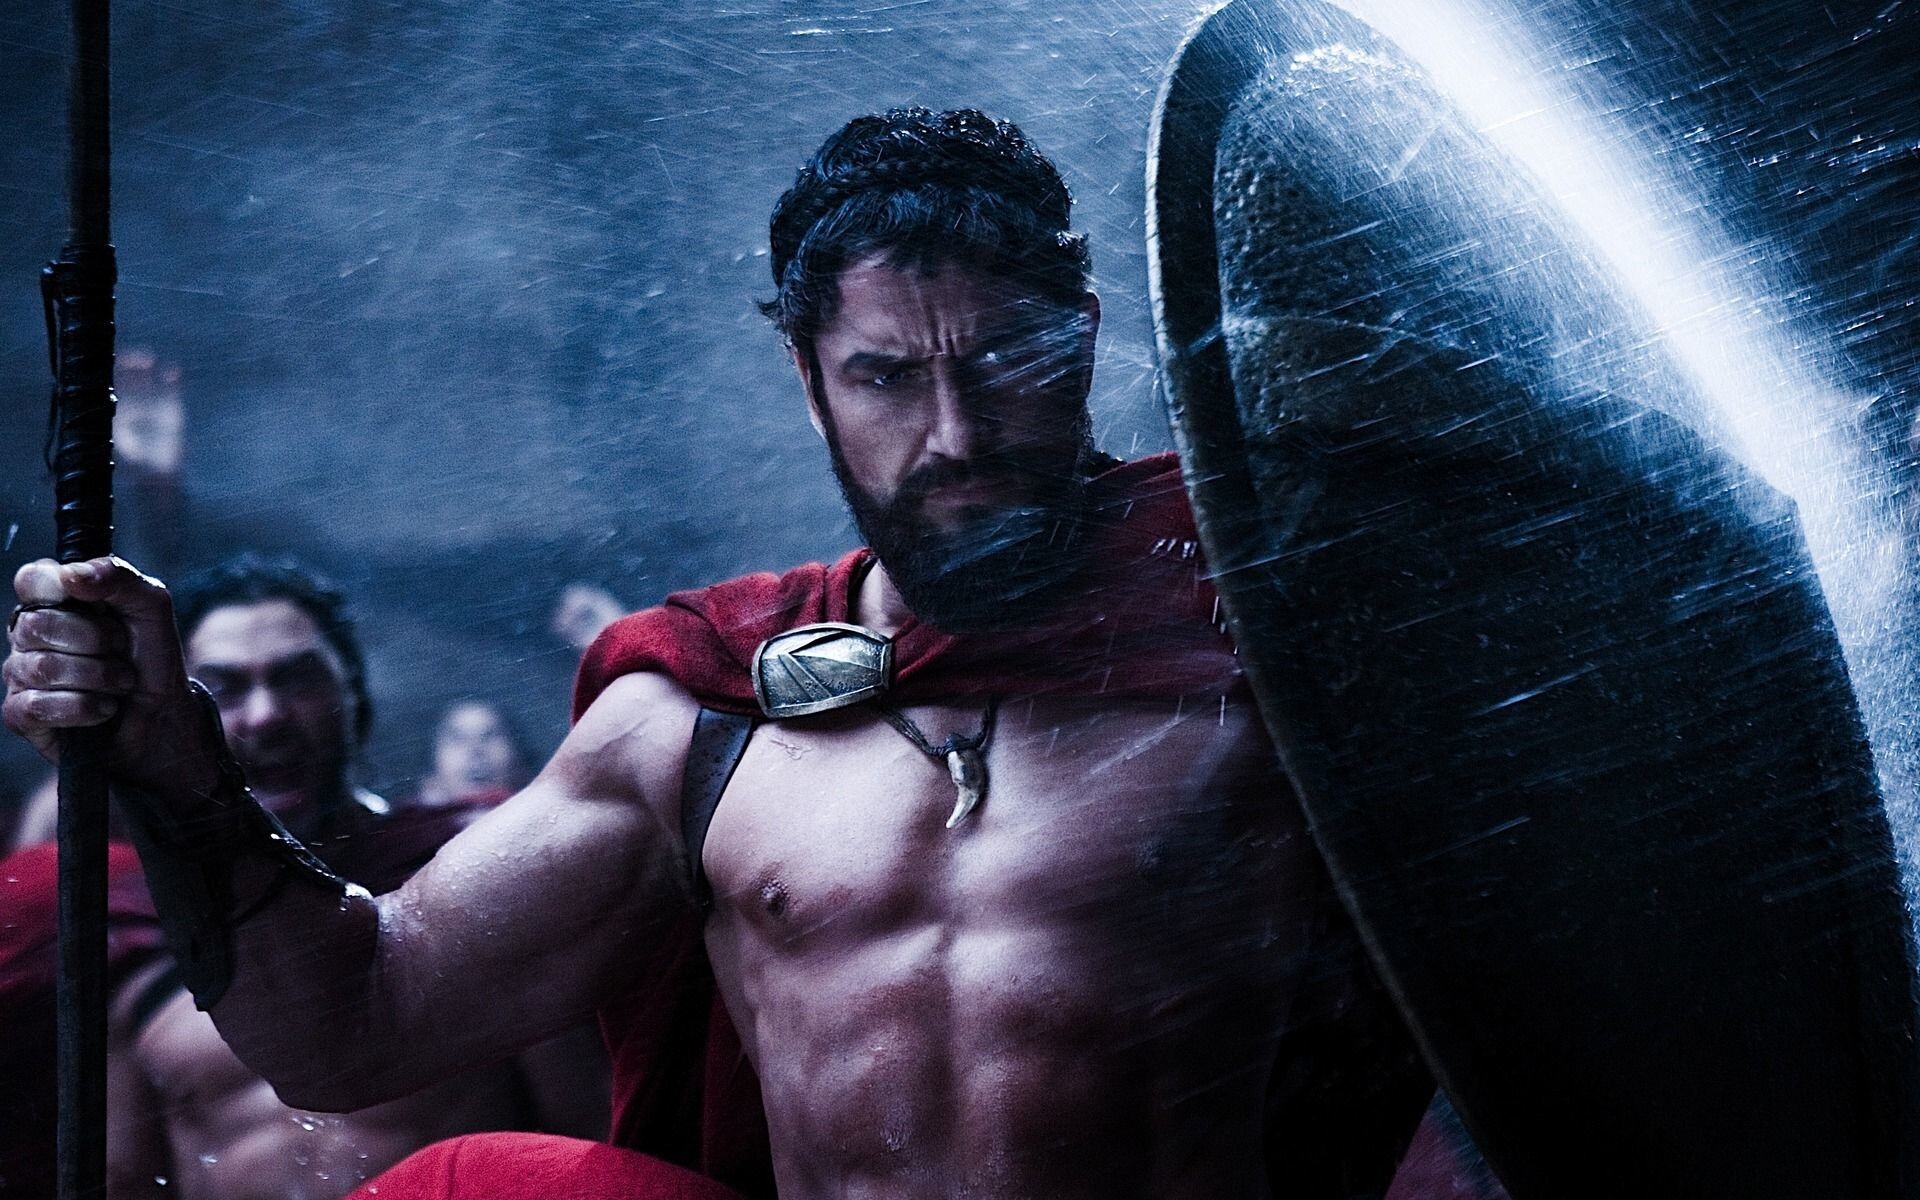 Sparta: Gerard Butler as King Leonidas I, 300, A 2006 American epic historical action film. 1920x1200 HD Wallpaper.